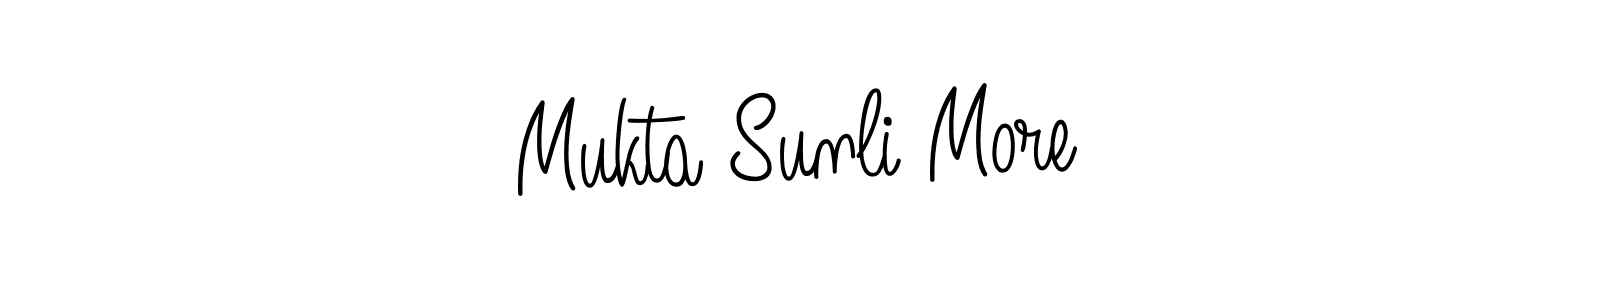 Make a beautiful signature design for name Mukta Sunli More. Use this online signature maker to create a handwritten signature for free. Mukta Sunli More signature style 5 images and pictures png